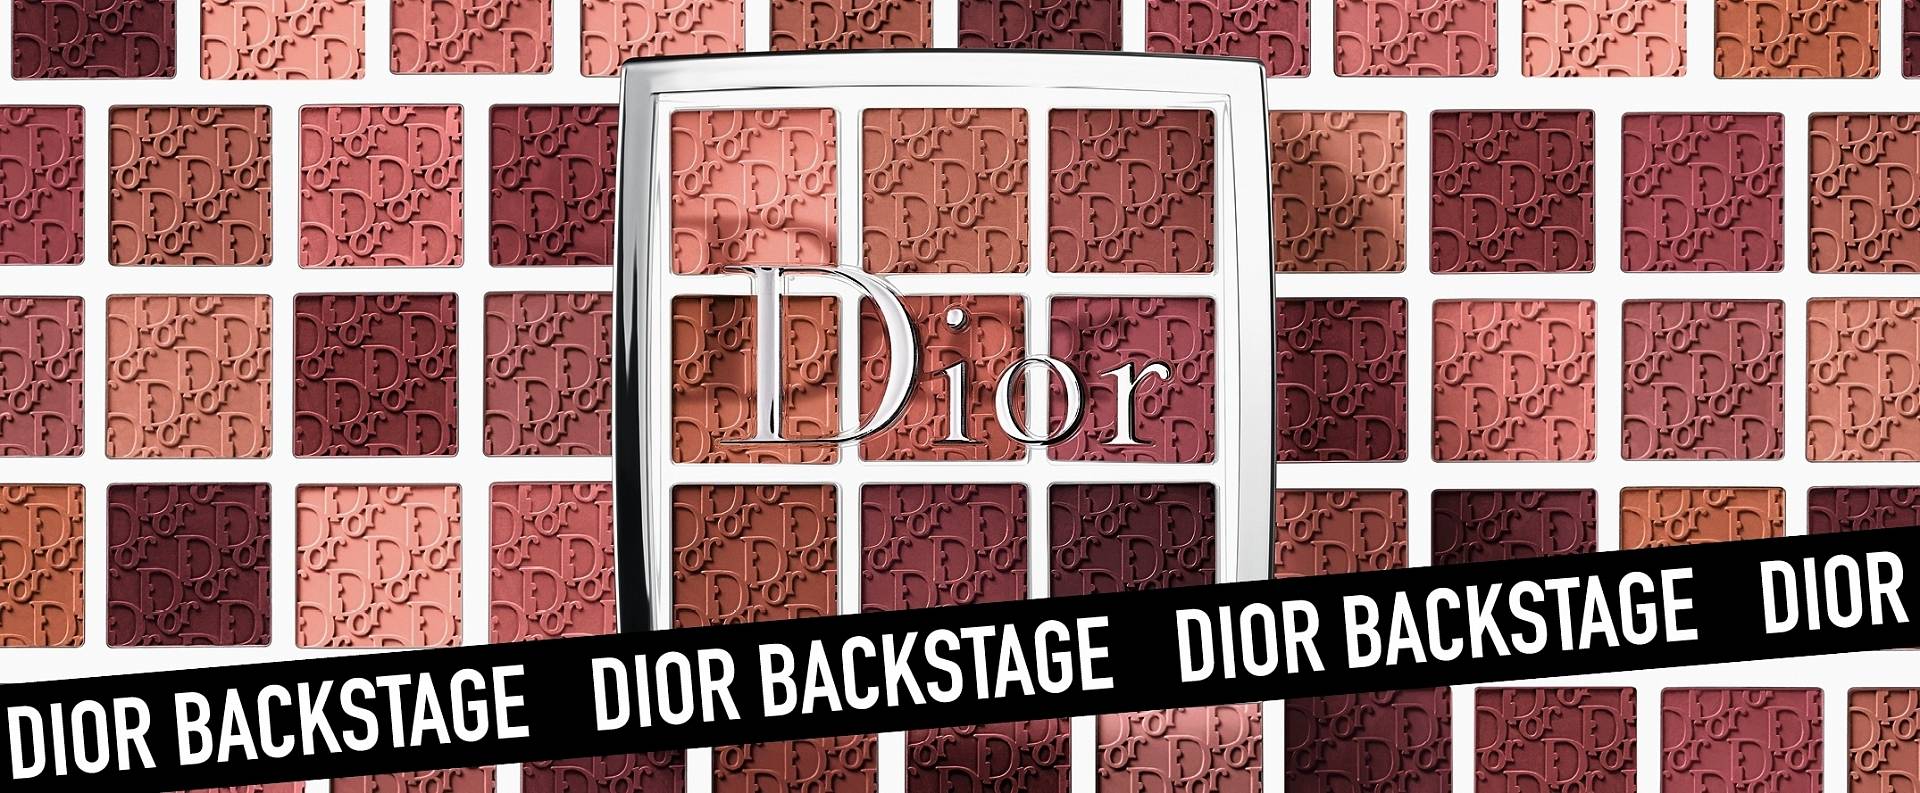 Dior Backstage